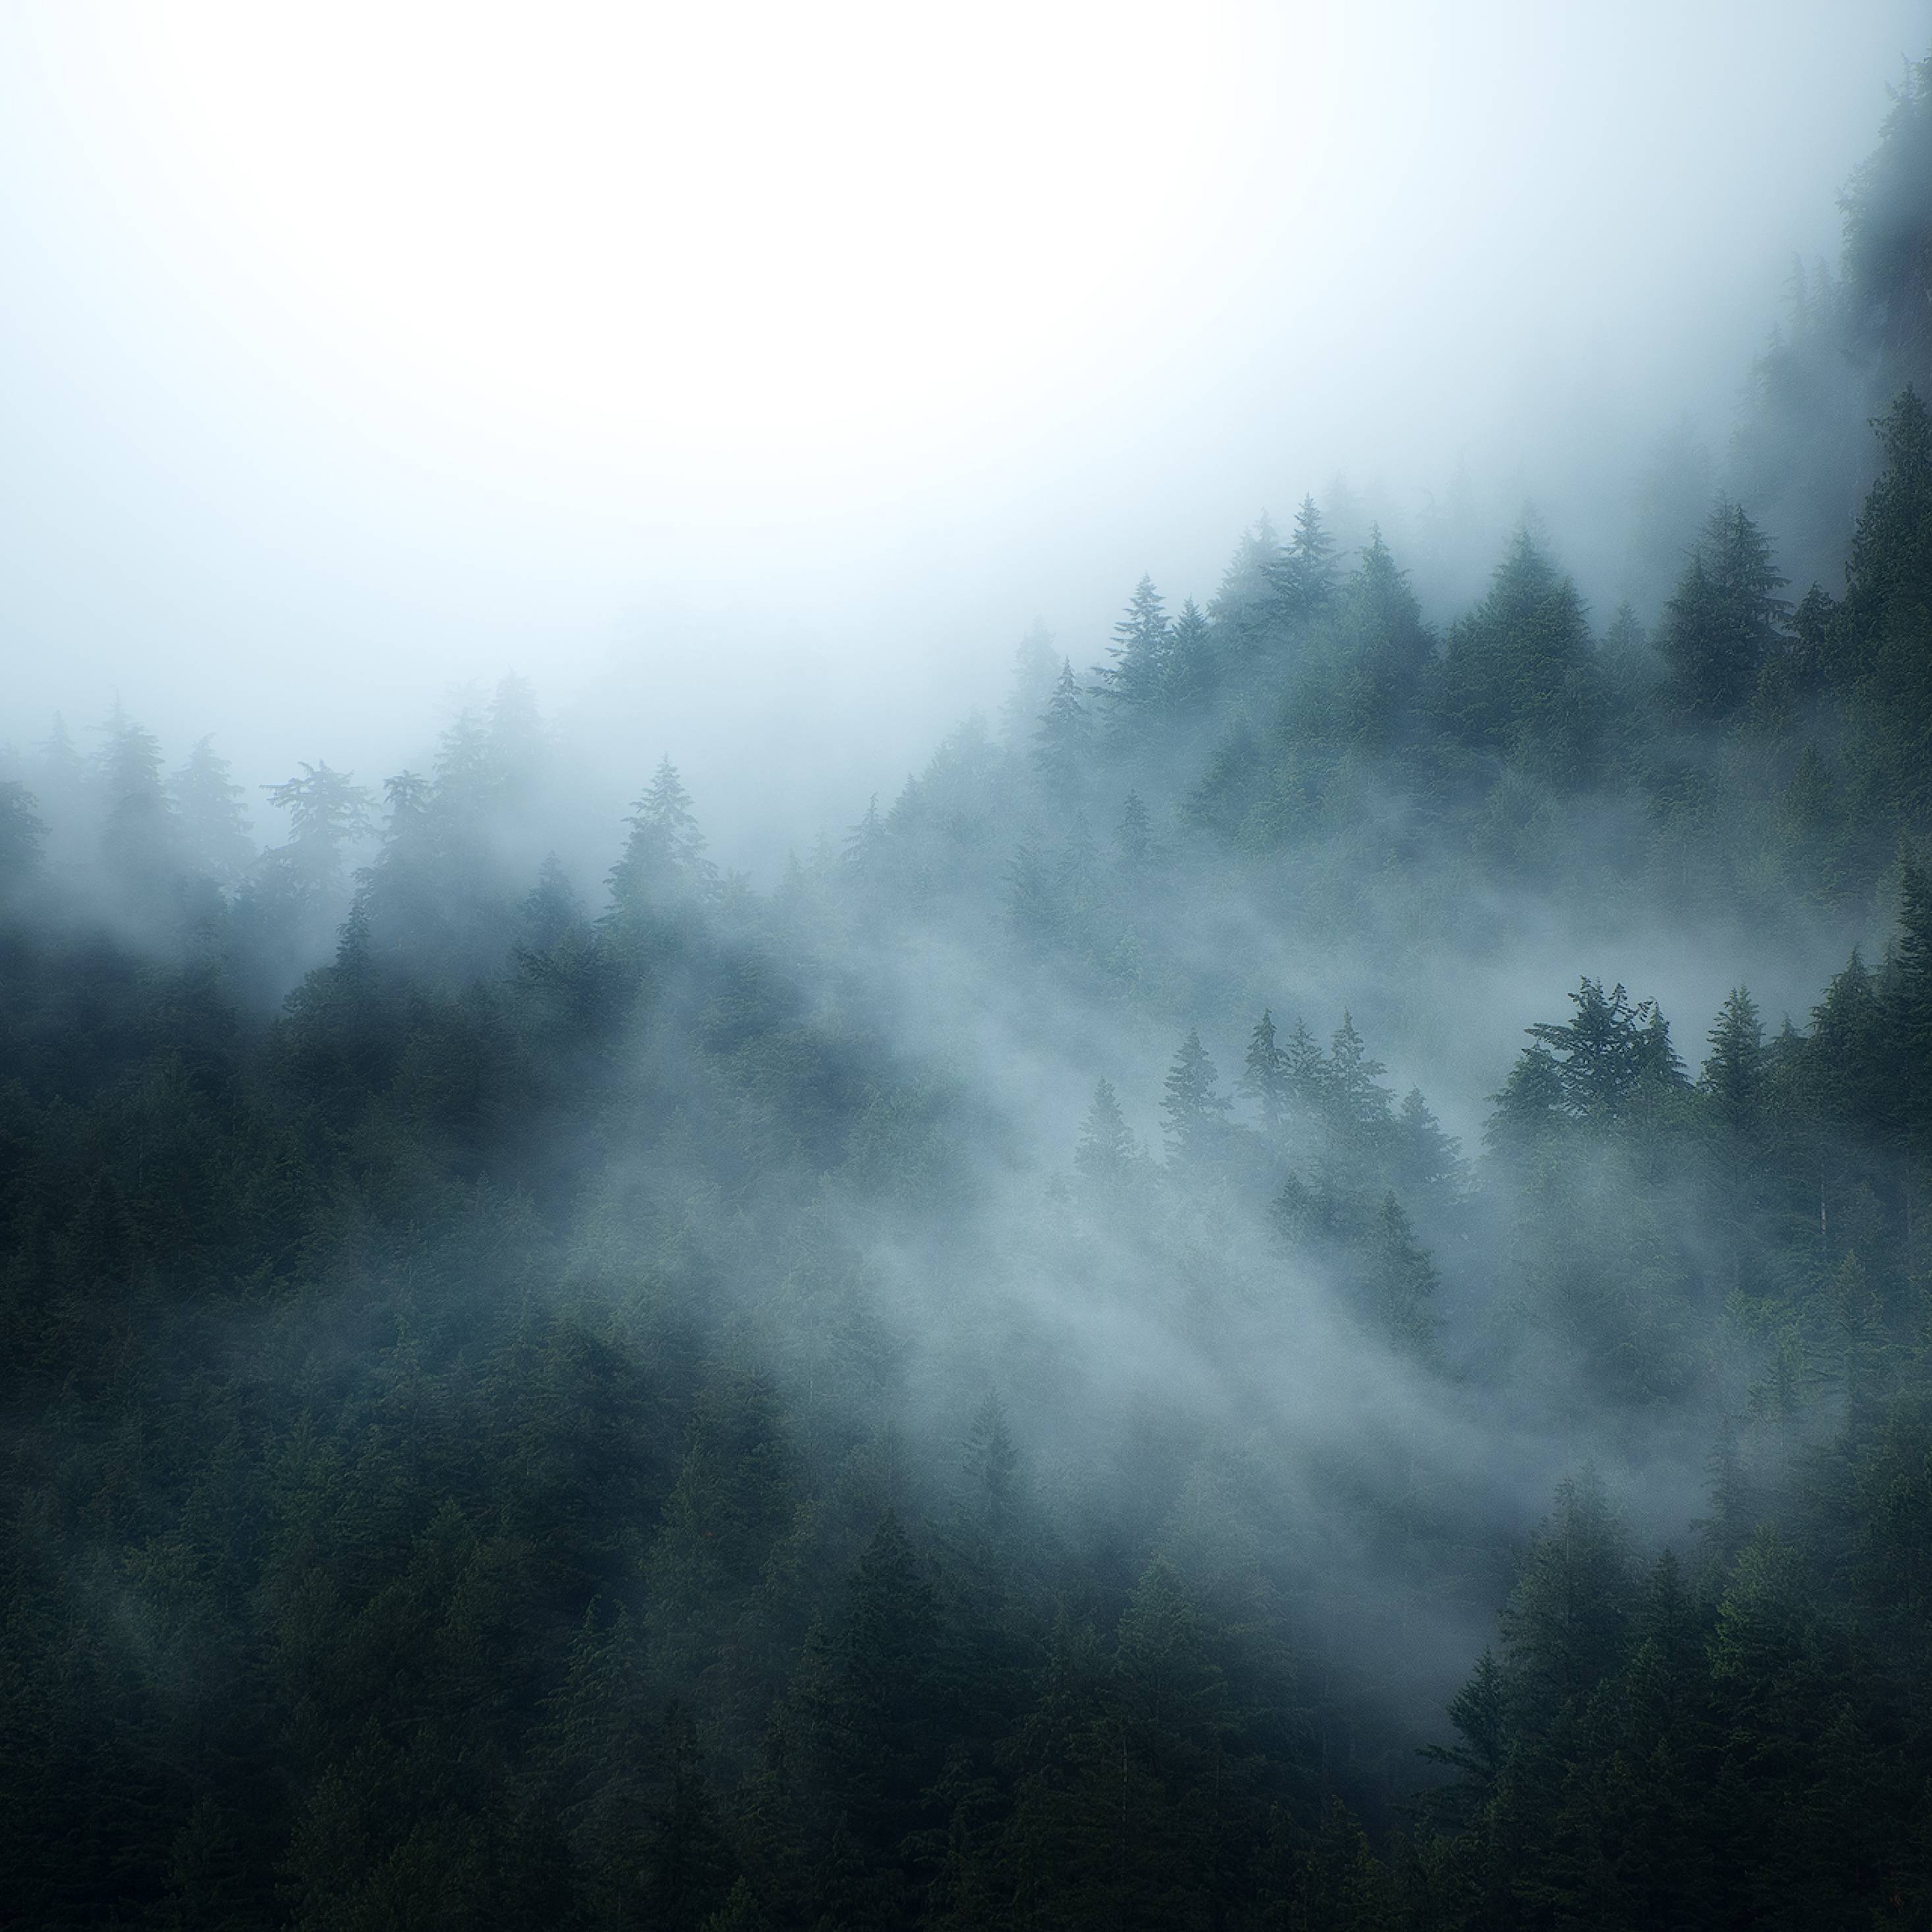 British Columbia Foggy Forest iPad Pro Retina Display Wallpaper, HD Nature 4K Wallpaper, Image, Photo and Background